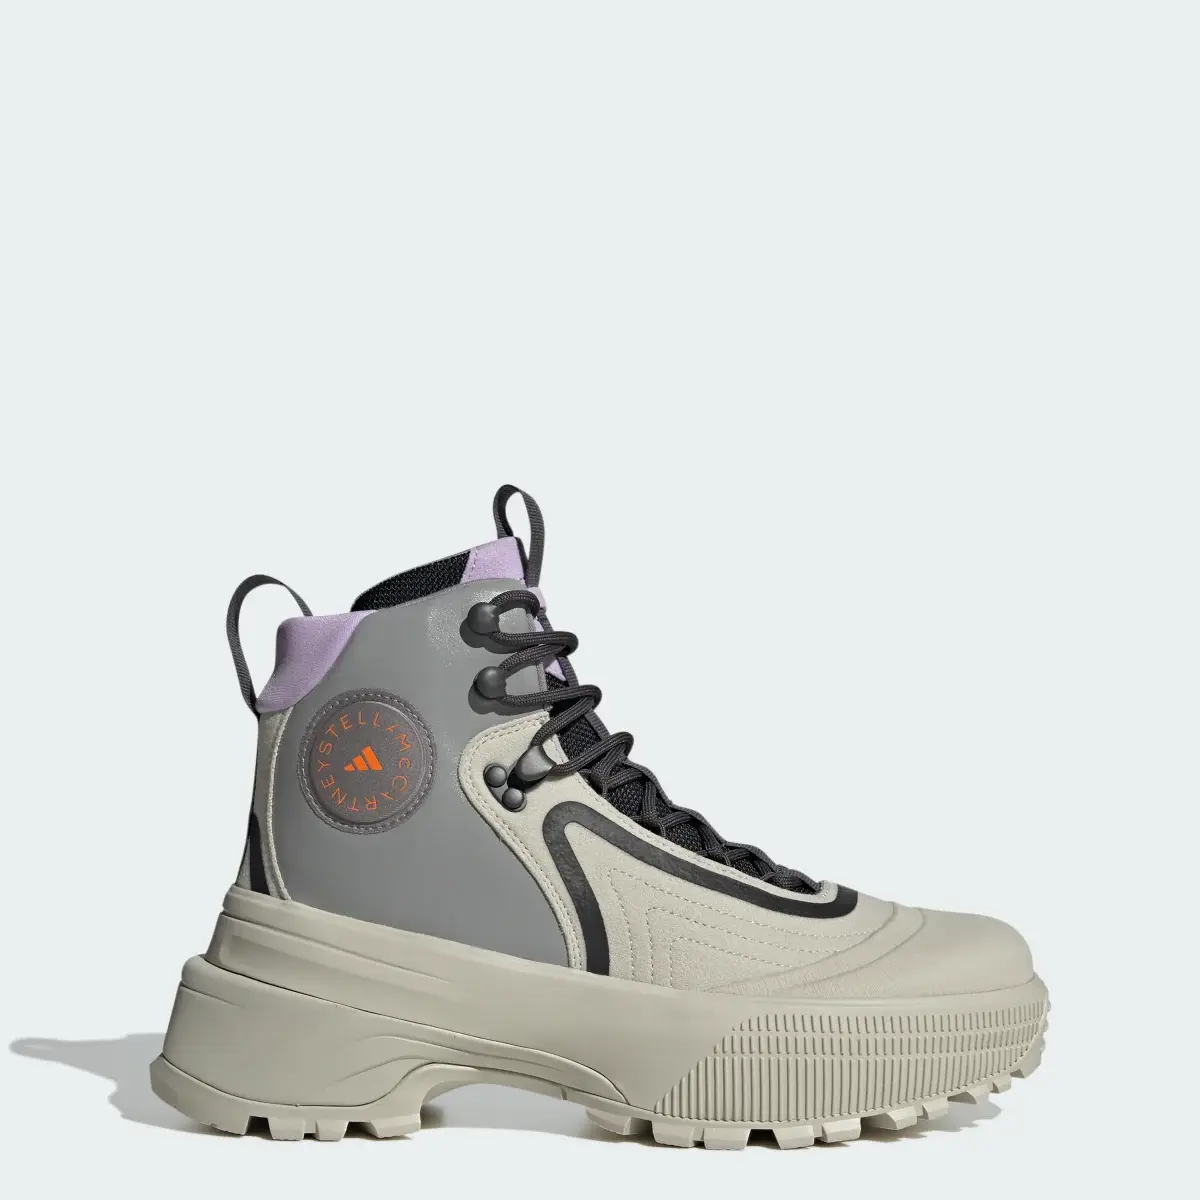 Adidas by Stella McCartney x Terrex Hiking Boots. 1